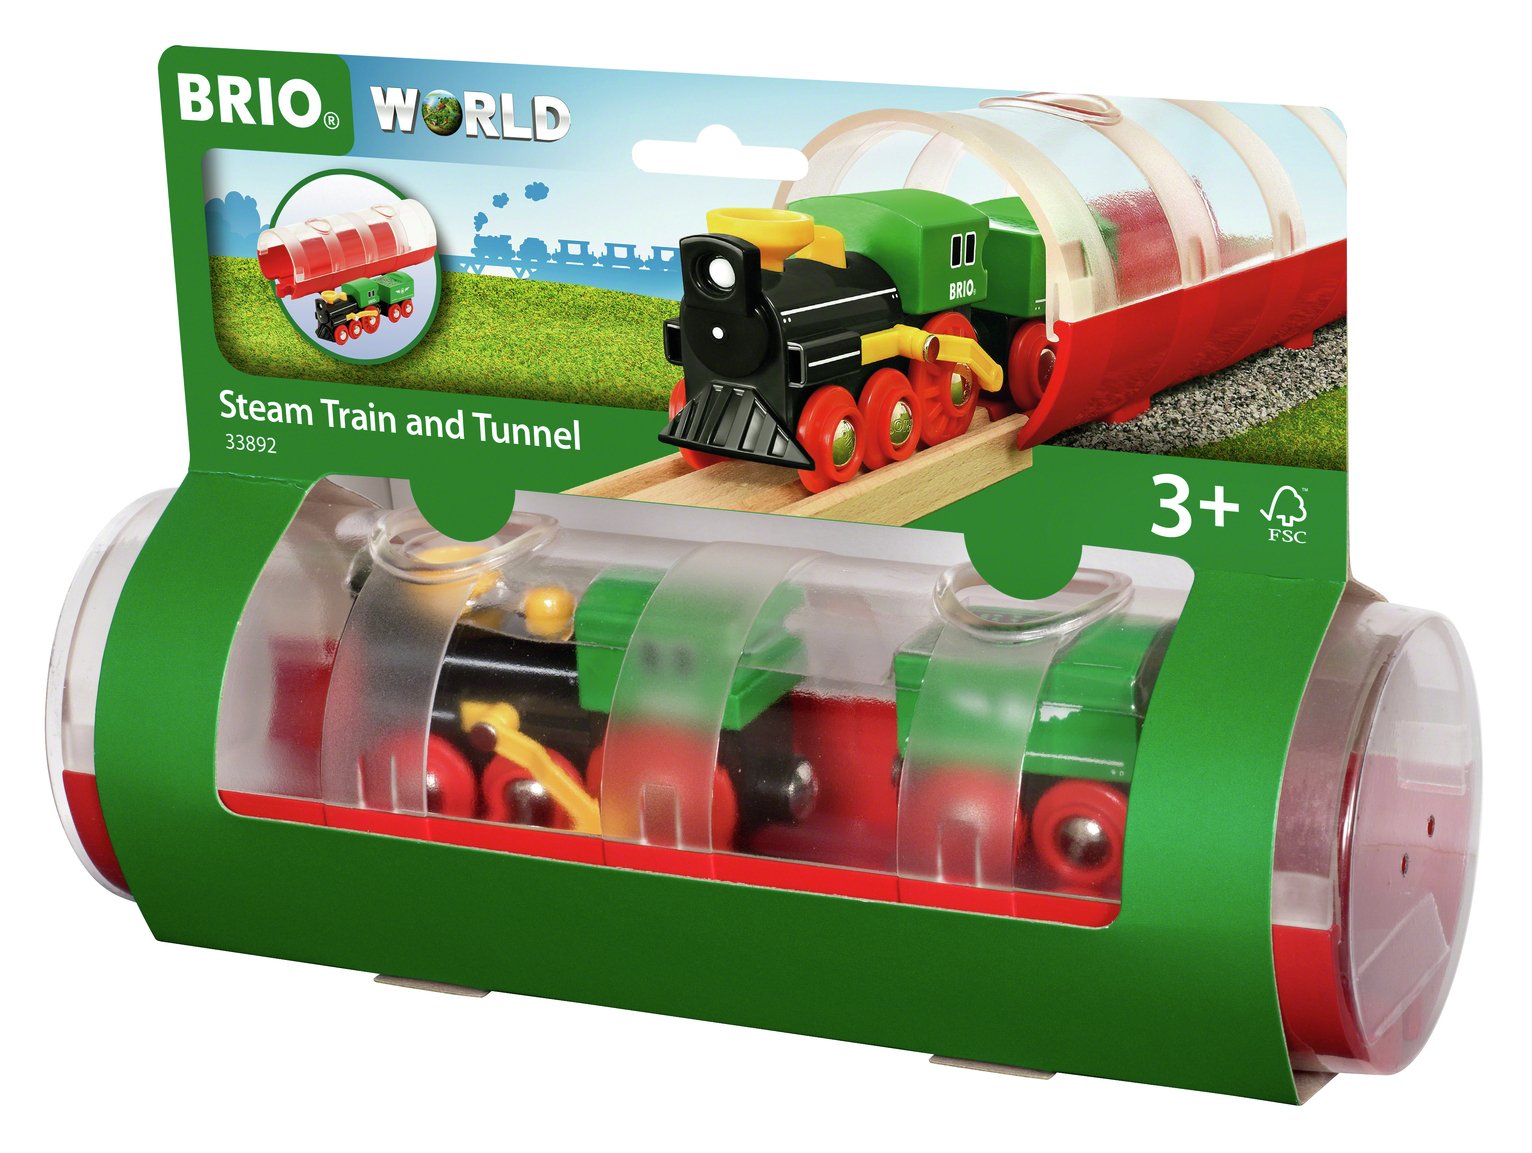 brio toy trains prices